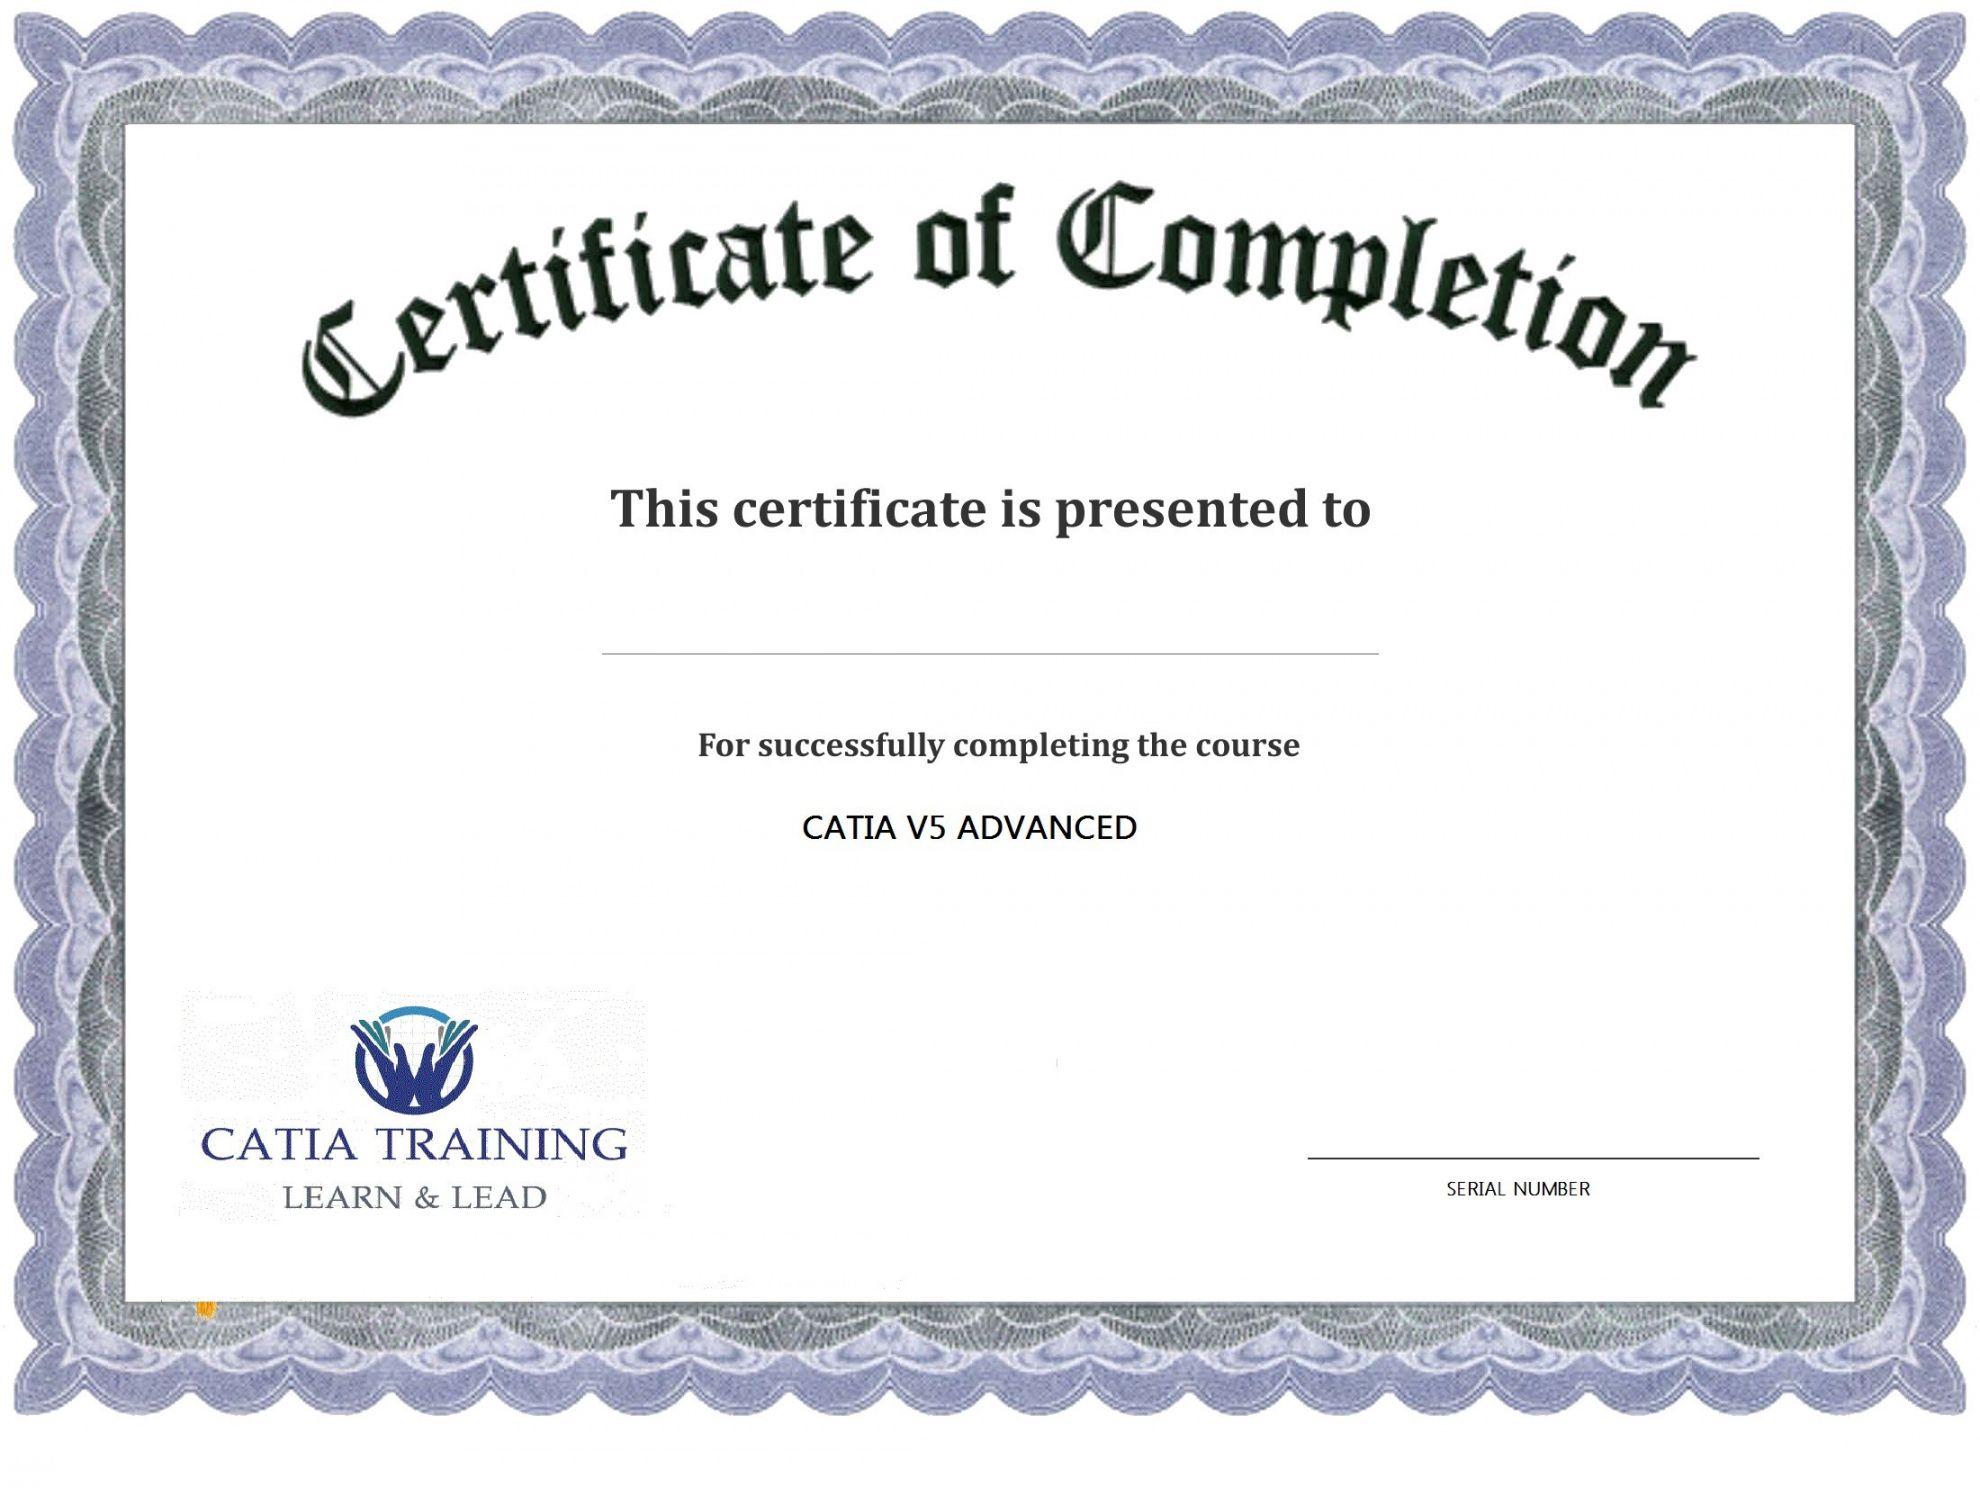 bond-certificate-template-emetonlineblog